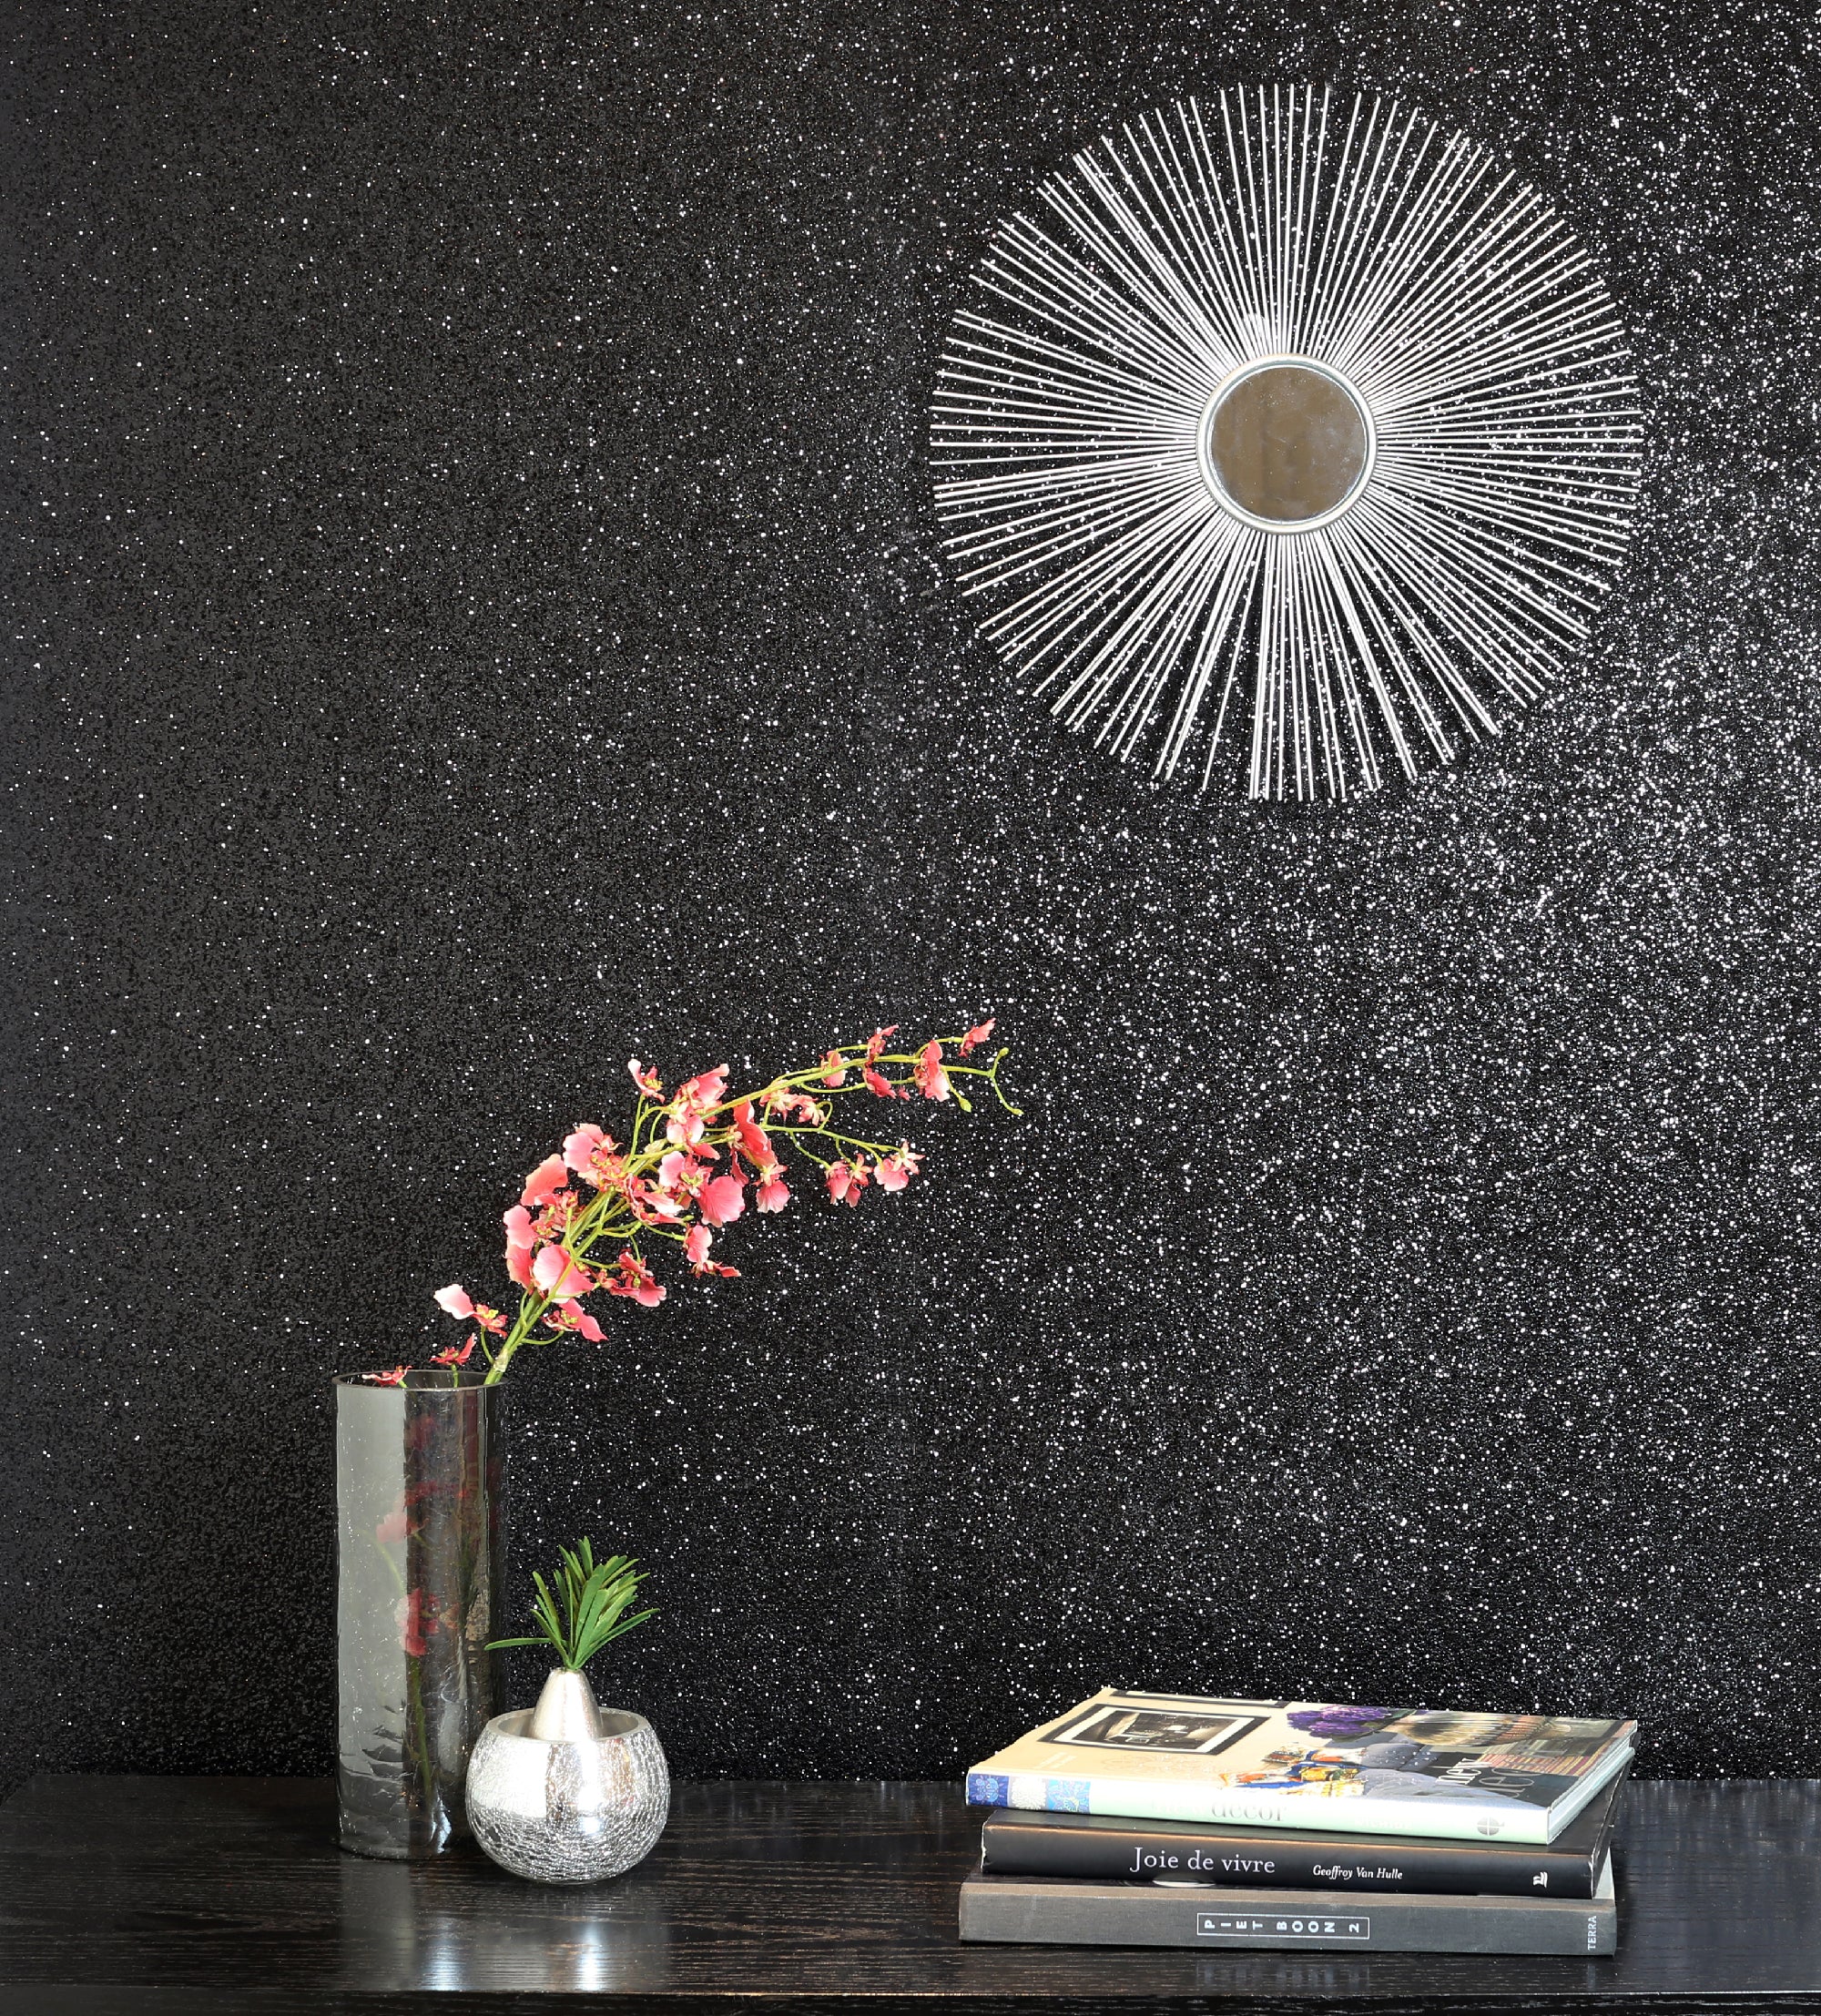 Sequin Sparkle Black Wallpaper